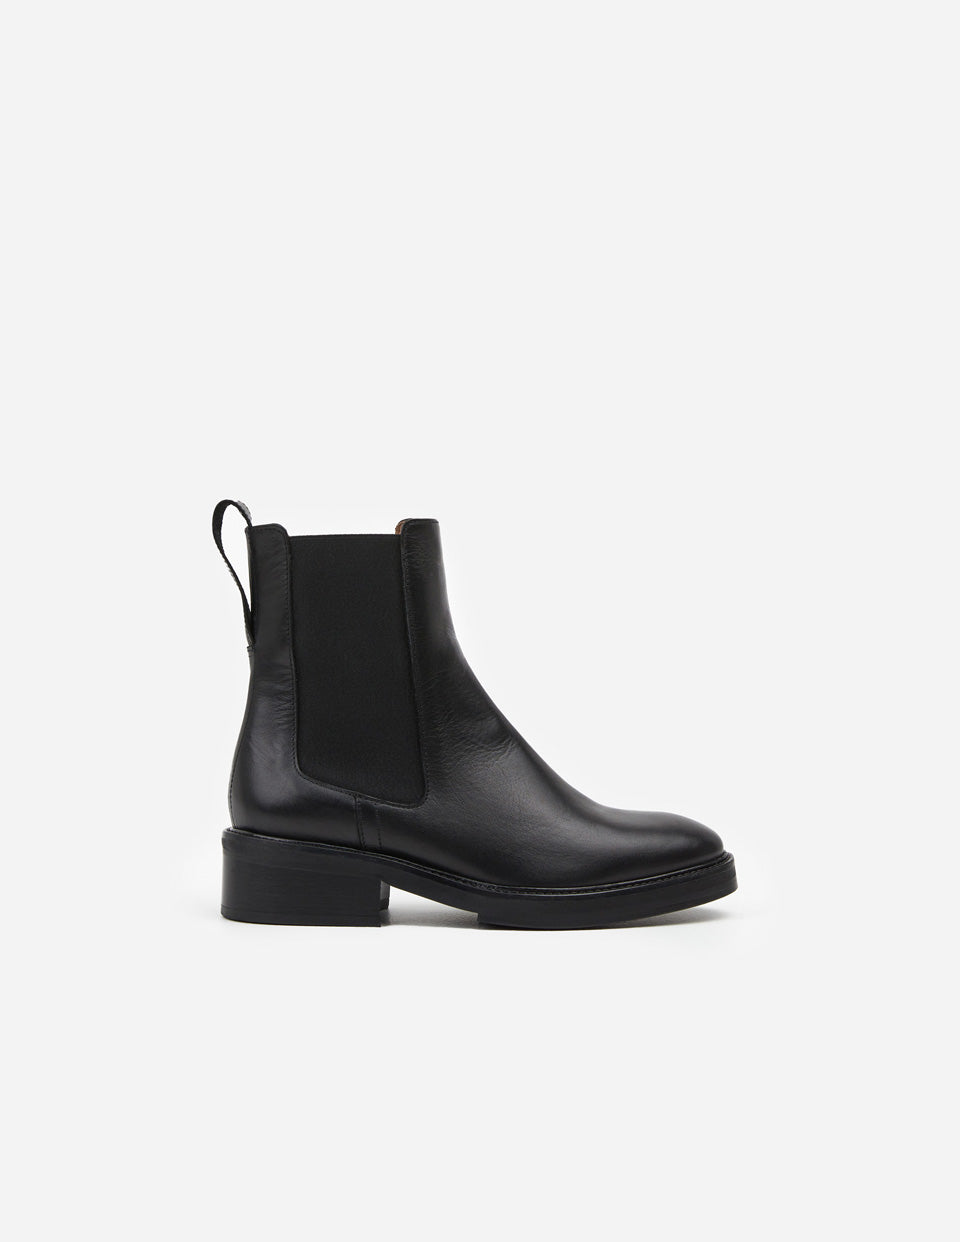 Franca Leather Black-Schuhe-Flattered-OUTLET-5-Black leather-ARCHIVIST-ARCHIVE-SALE